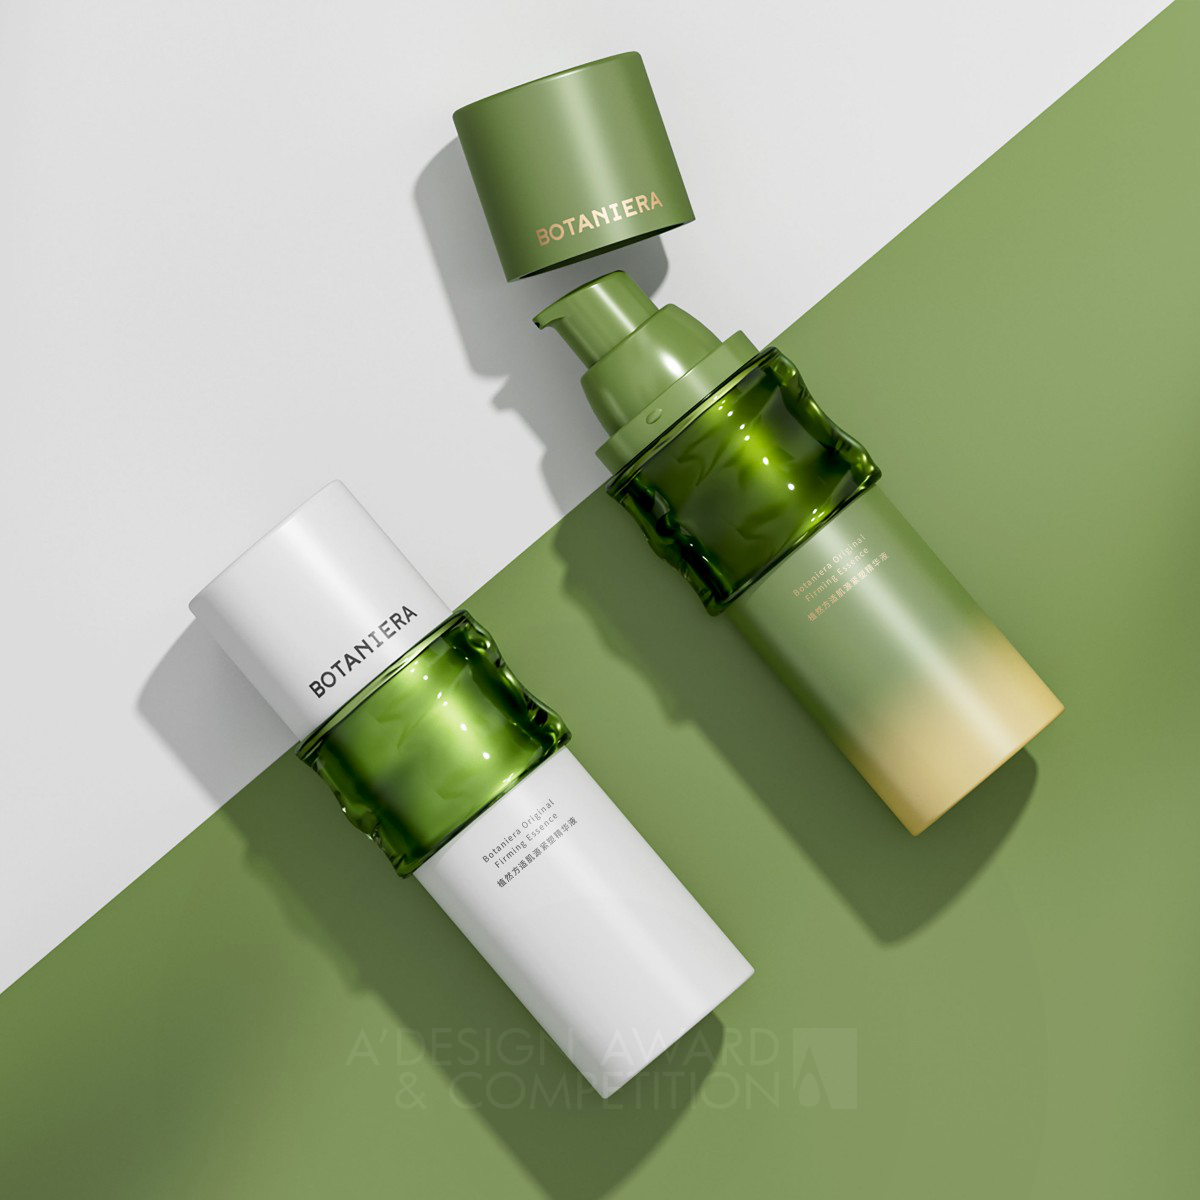 Botaniera Original Firming Essence Skin Care Packaging by Chun Xue Creative Design